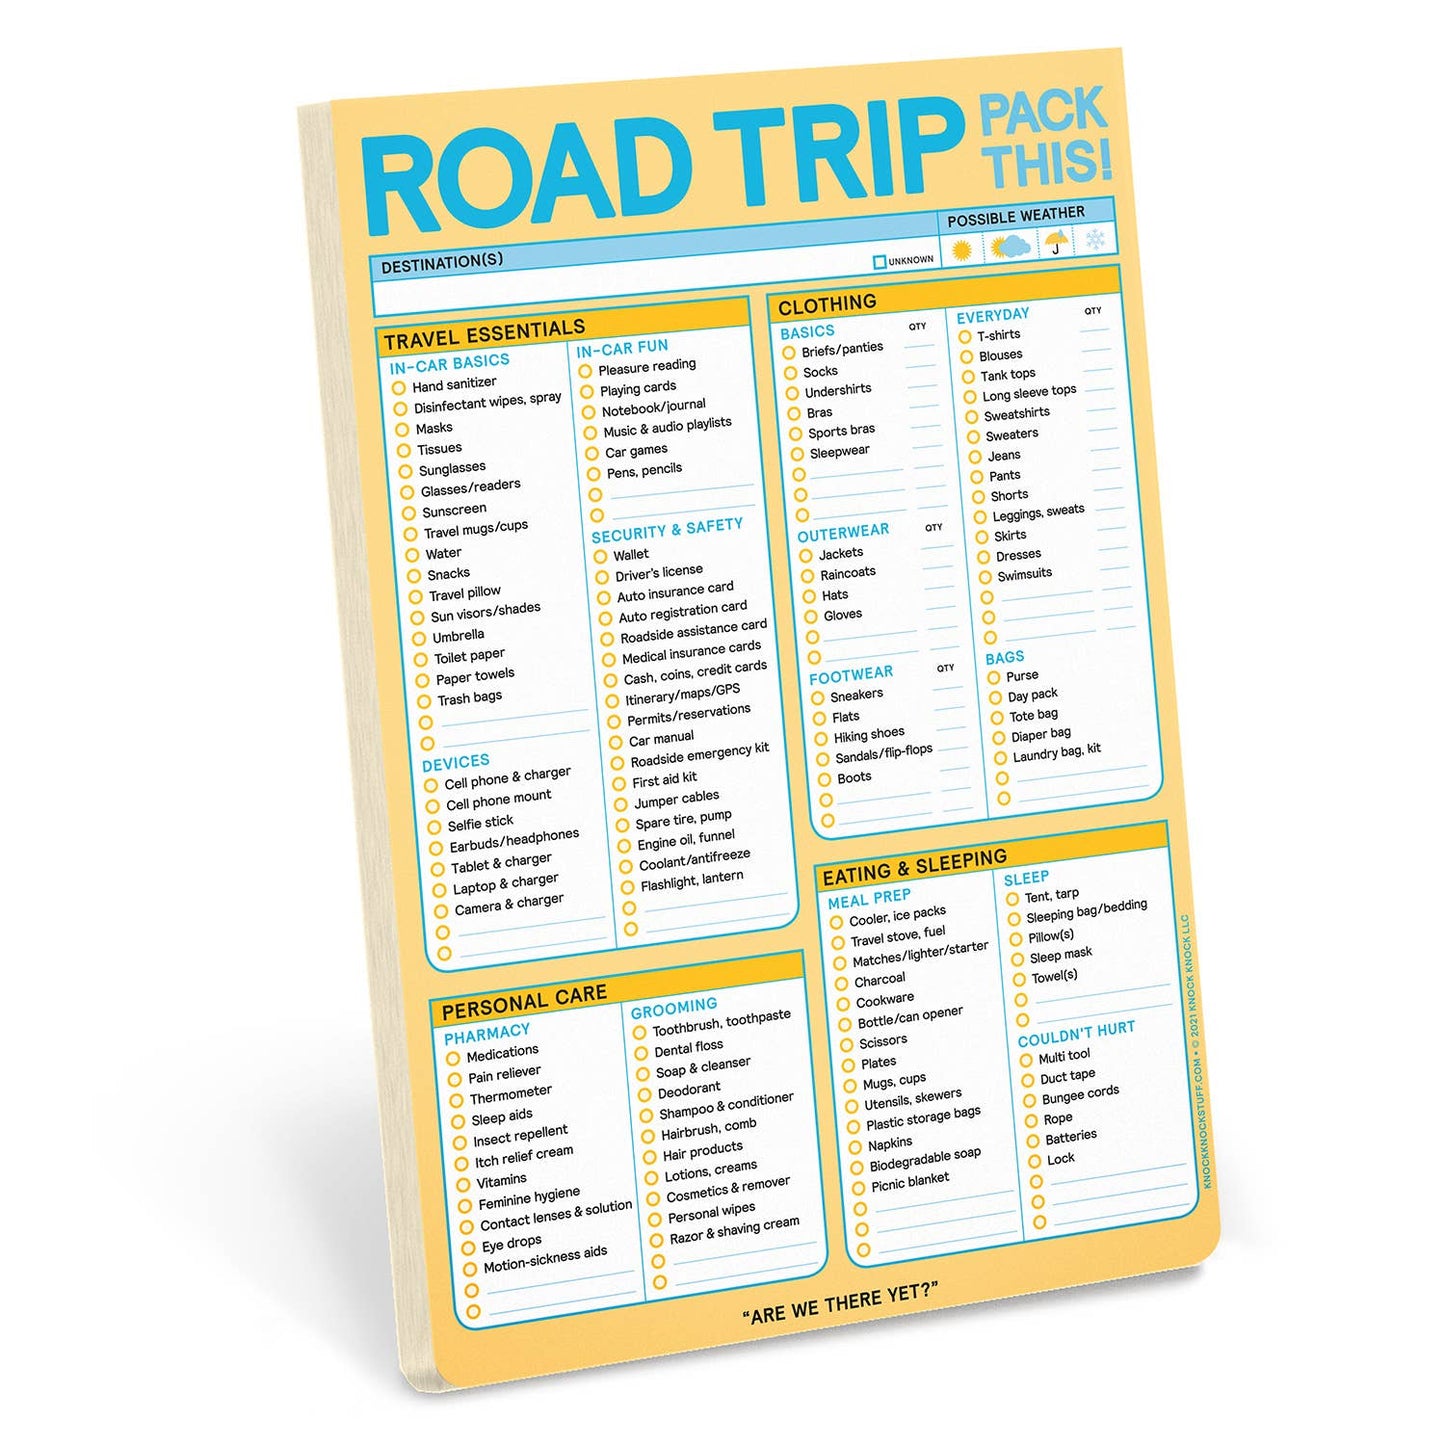 Notepad; Road Trip Pad, Pack This (60 Sheets)